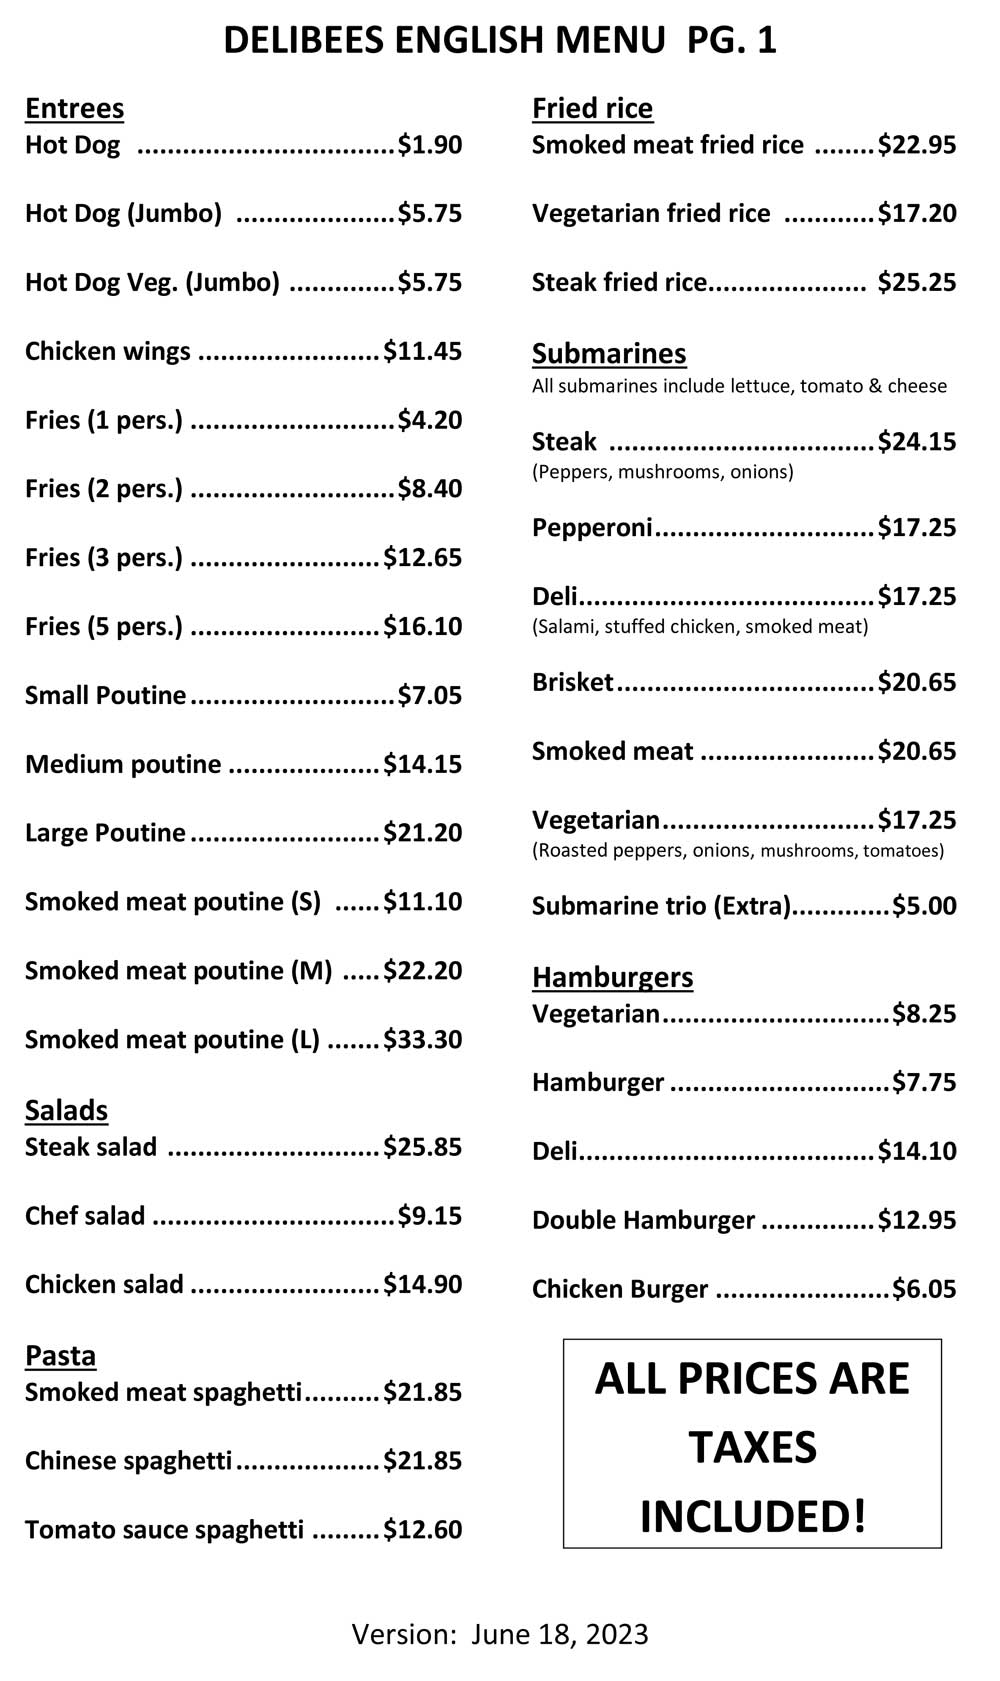 delibees-english-menu-p1-1000x1681